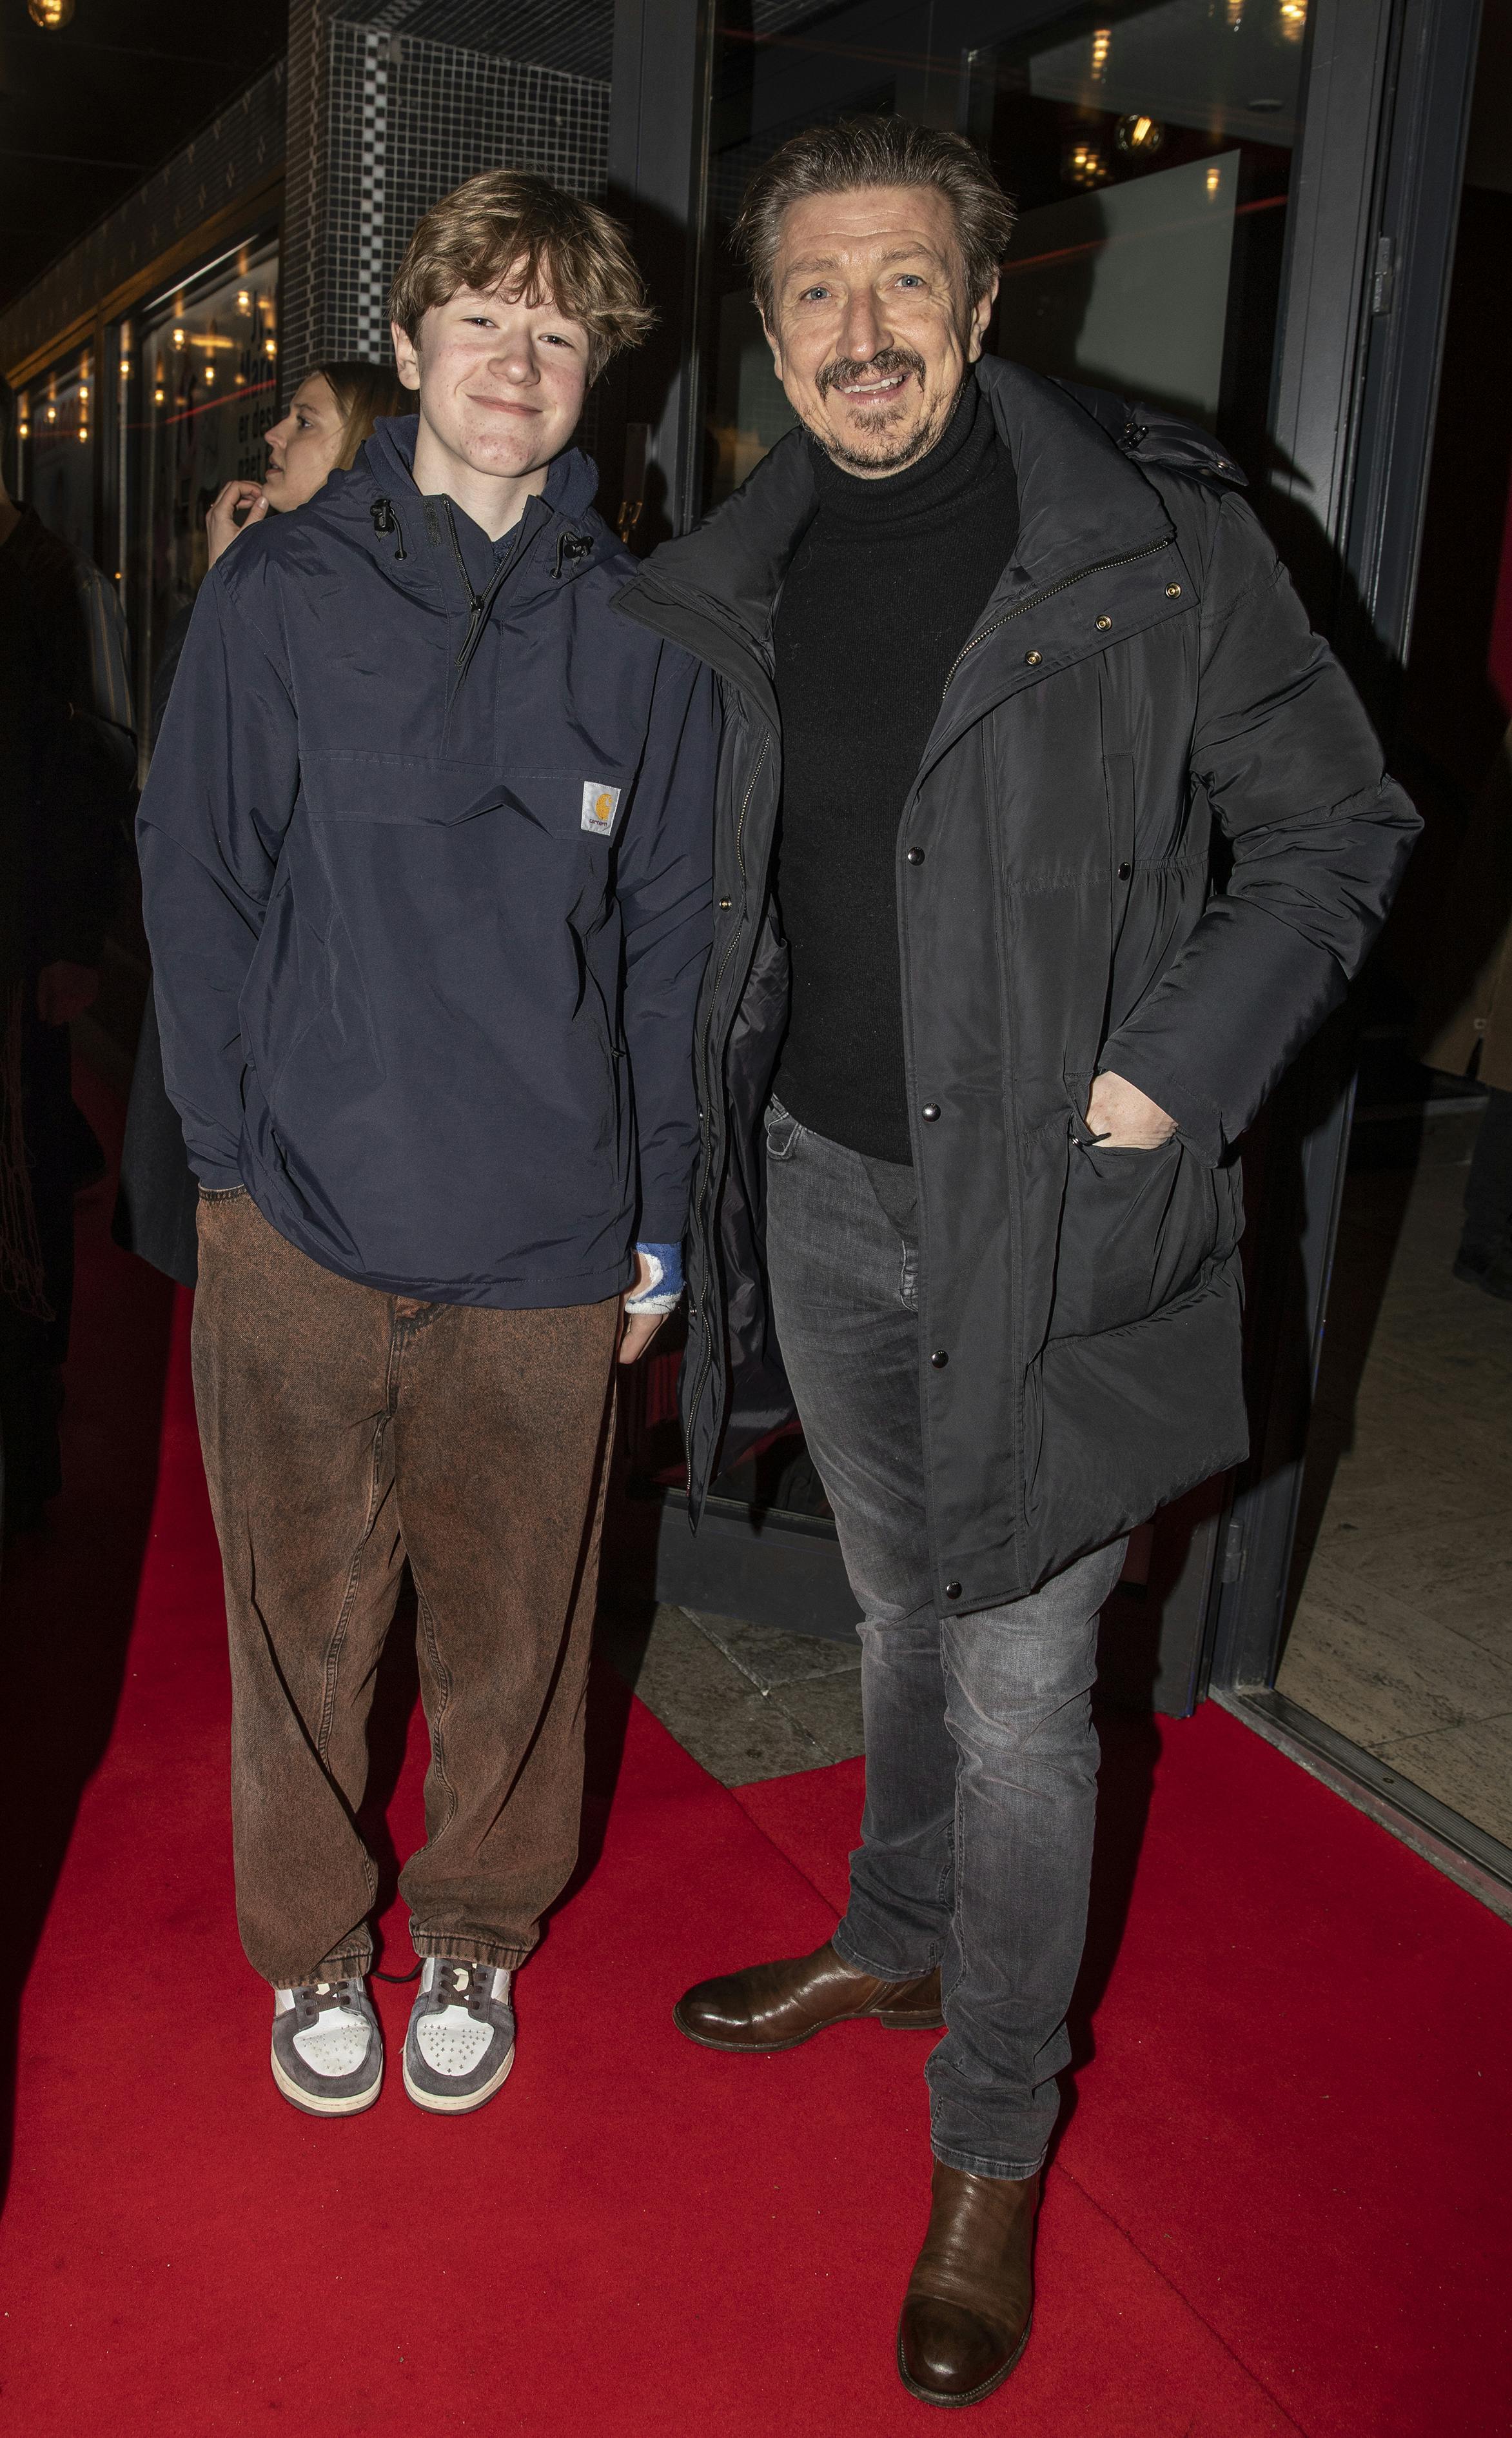 Far og søn Nicolaj Kopernikus og Louis Næss-Schmidt til premiere på forestillingen "Jytte fra Marketing er gået for i dag! på Nørrebro Teater.
